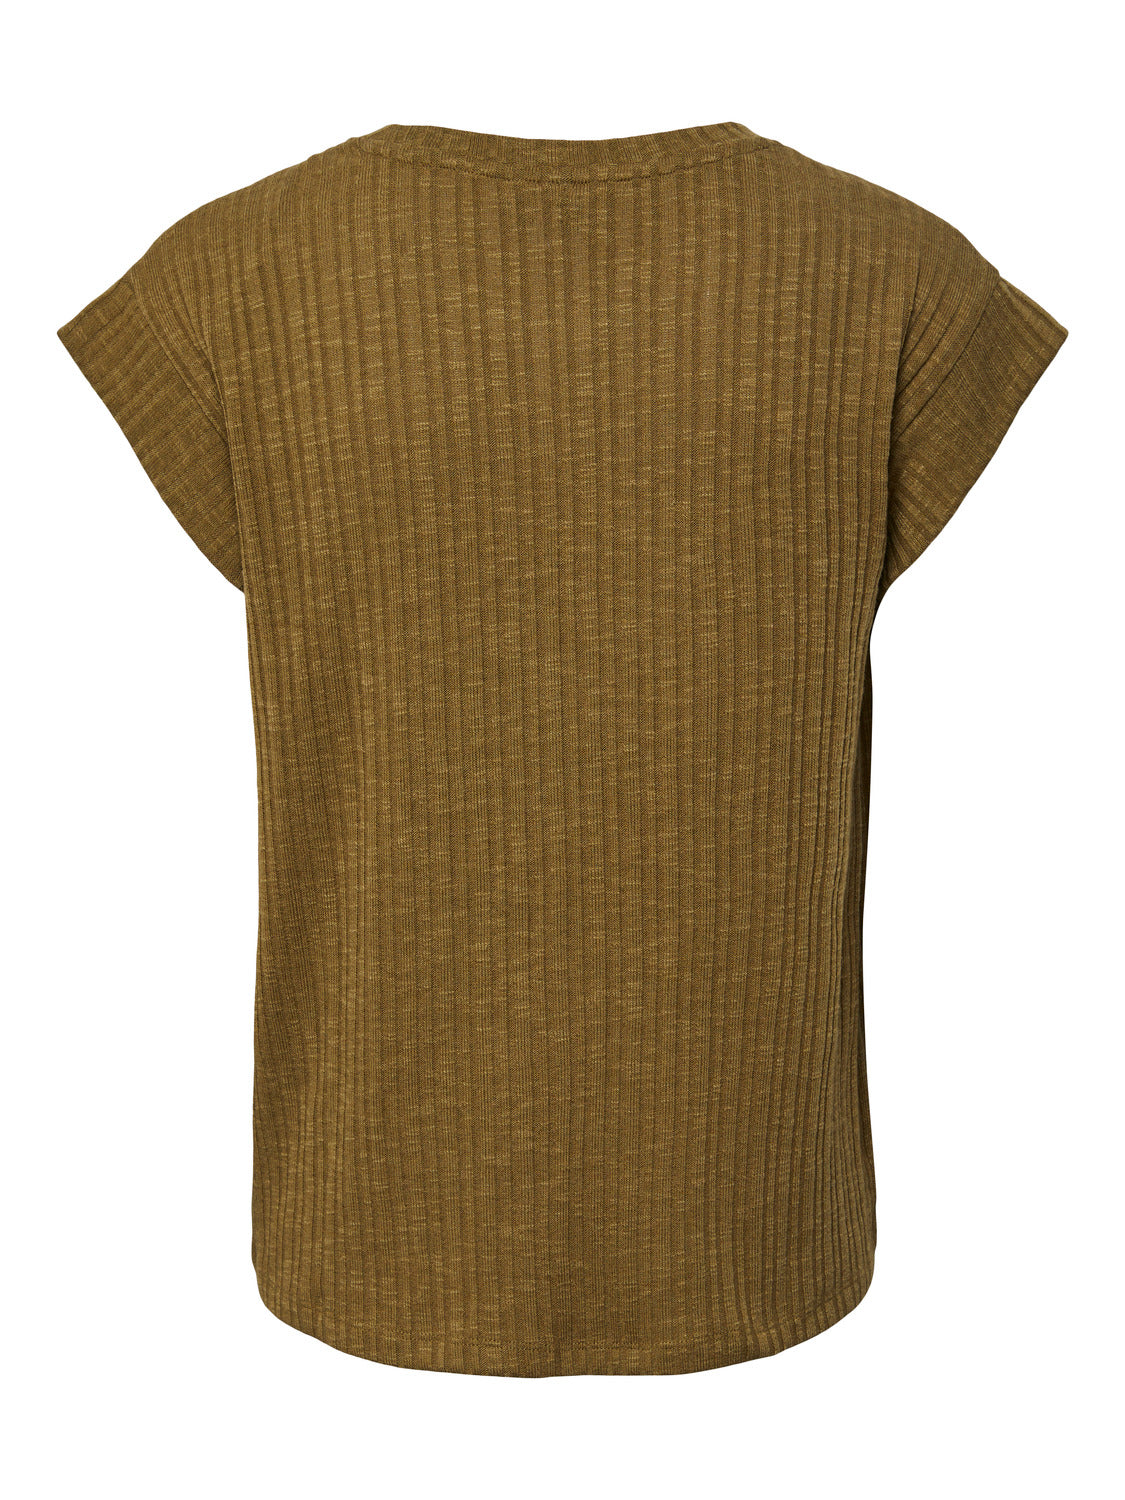 PCLENA T-Shirt - Olive Drab